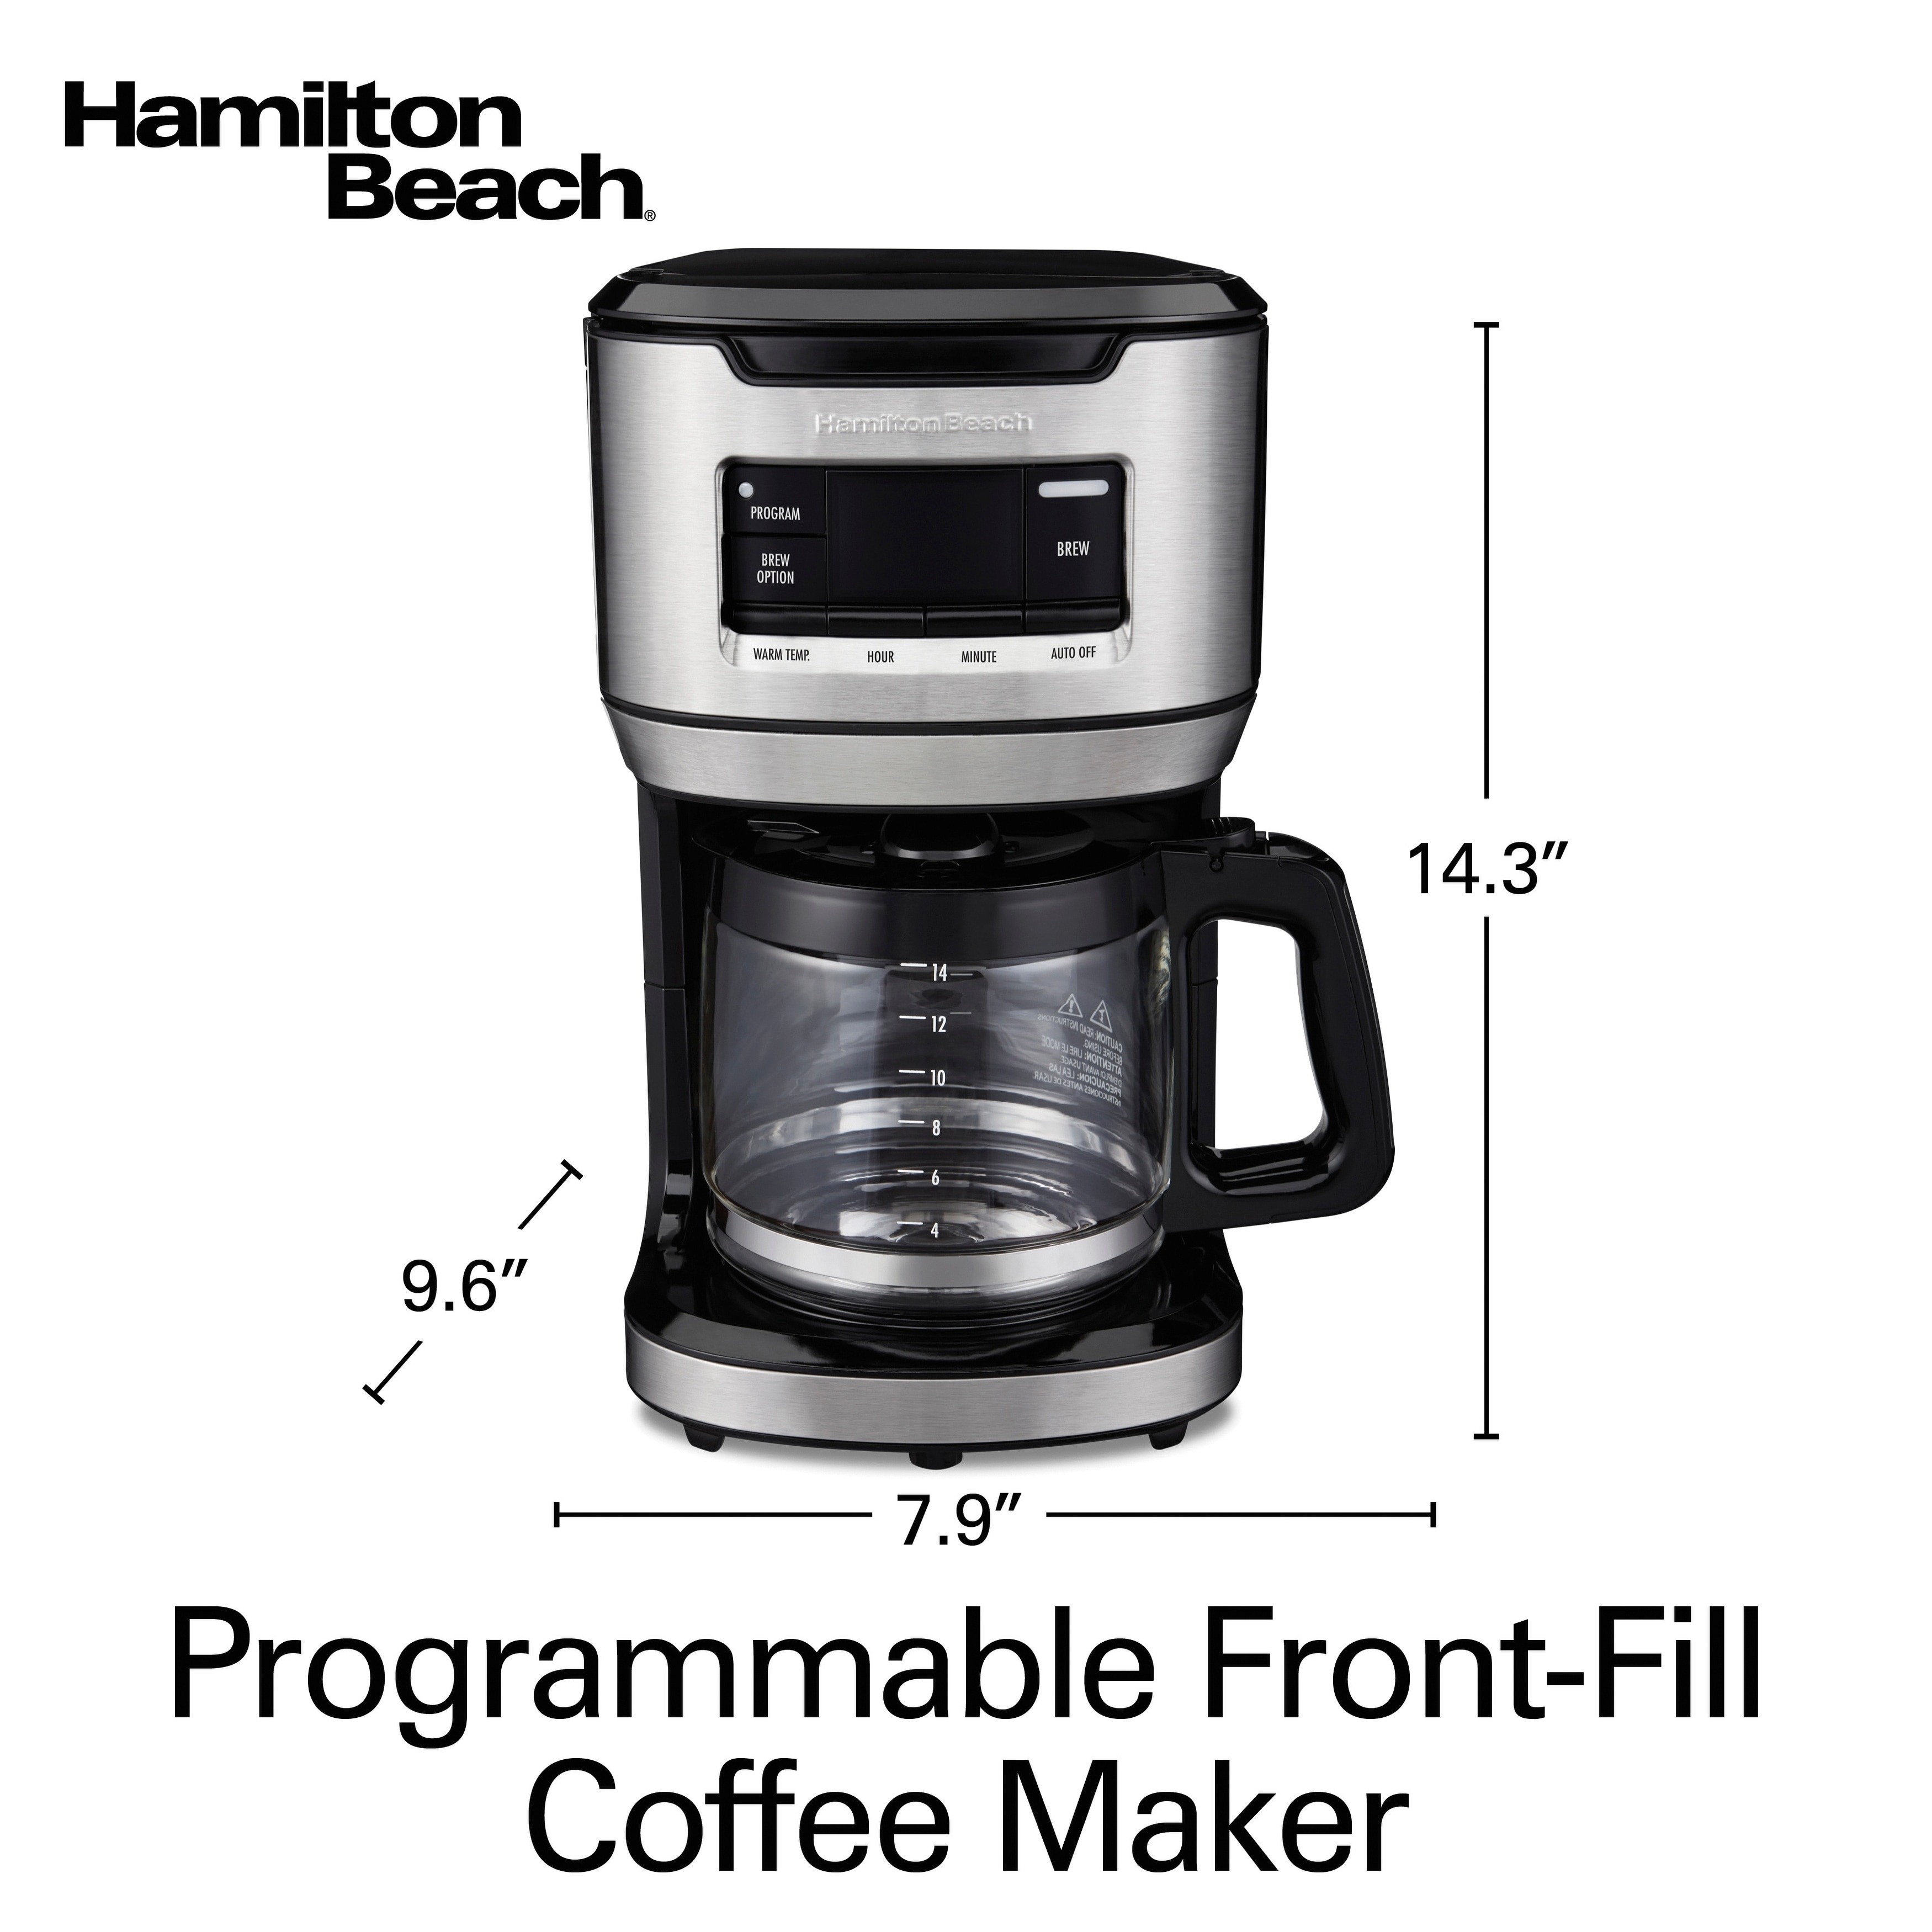 https://ak1.ostkcdn.com/images/products/30970347/Hamilton-Beach-Front-Fill-14-Cup-Programmable-Coffee-Maker-b9f638e6-670f-4188-aea0-ca69e3c1b66c.jpg